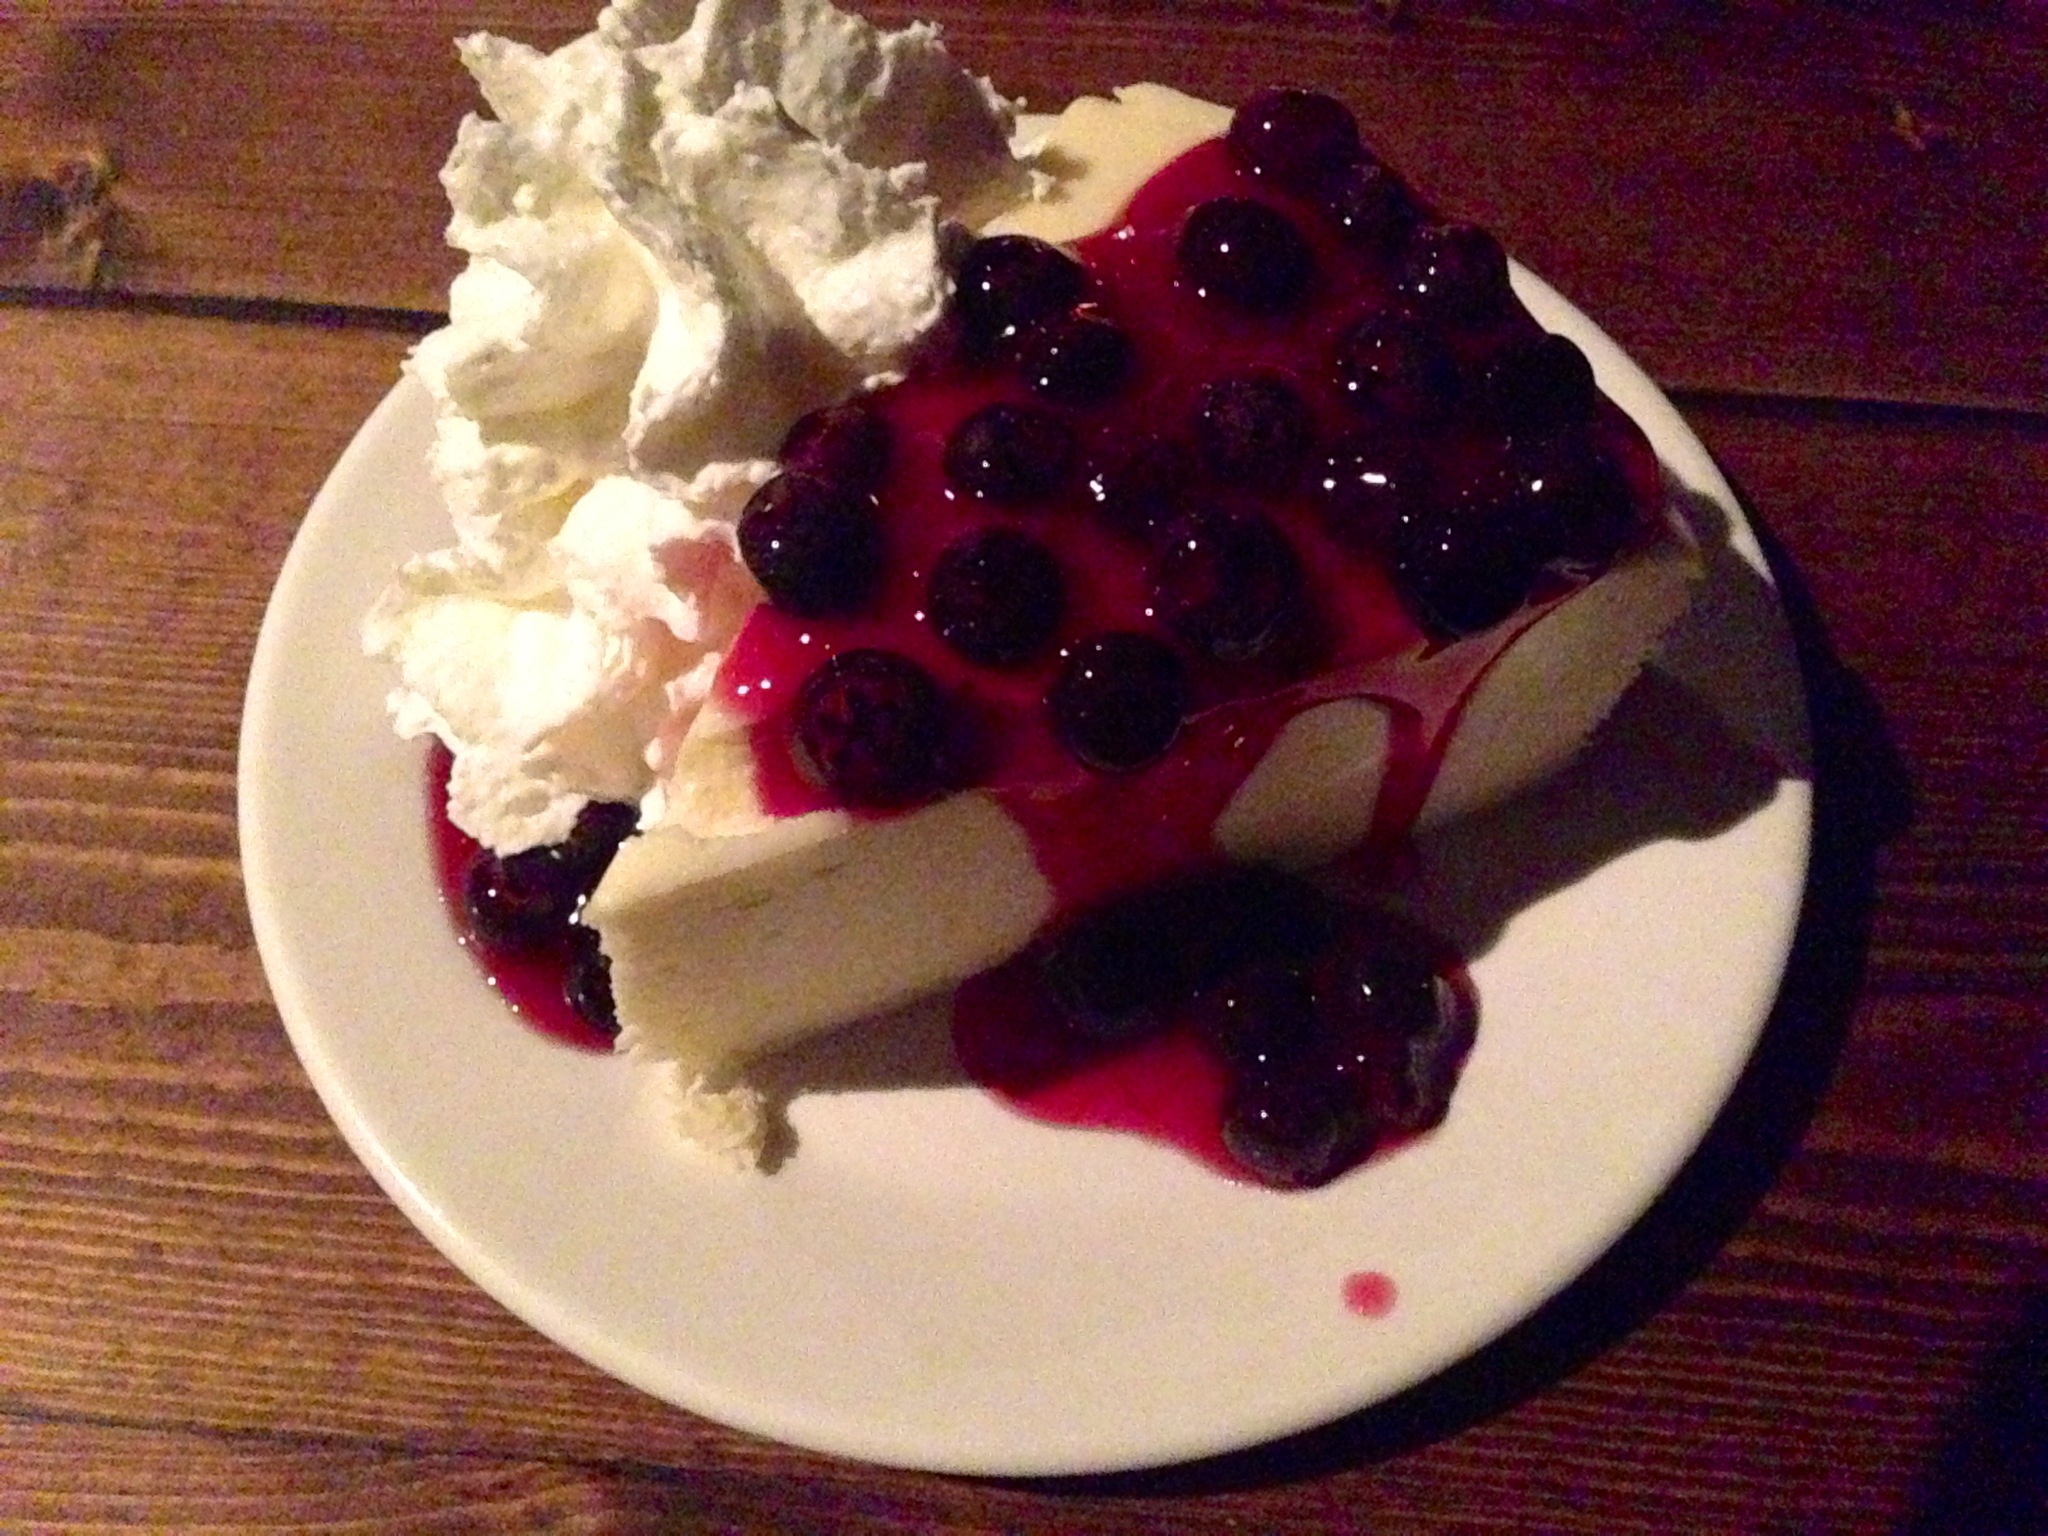 Original Cheesecake with Blueberries